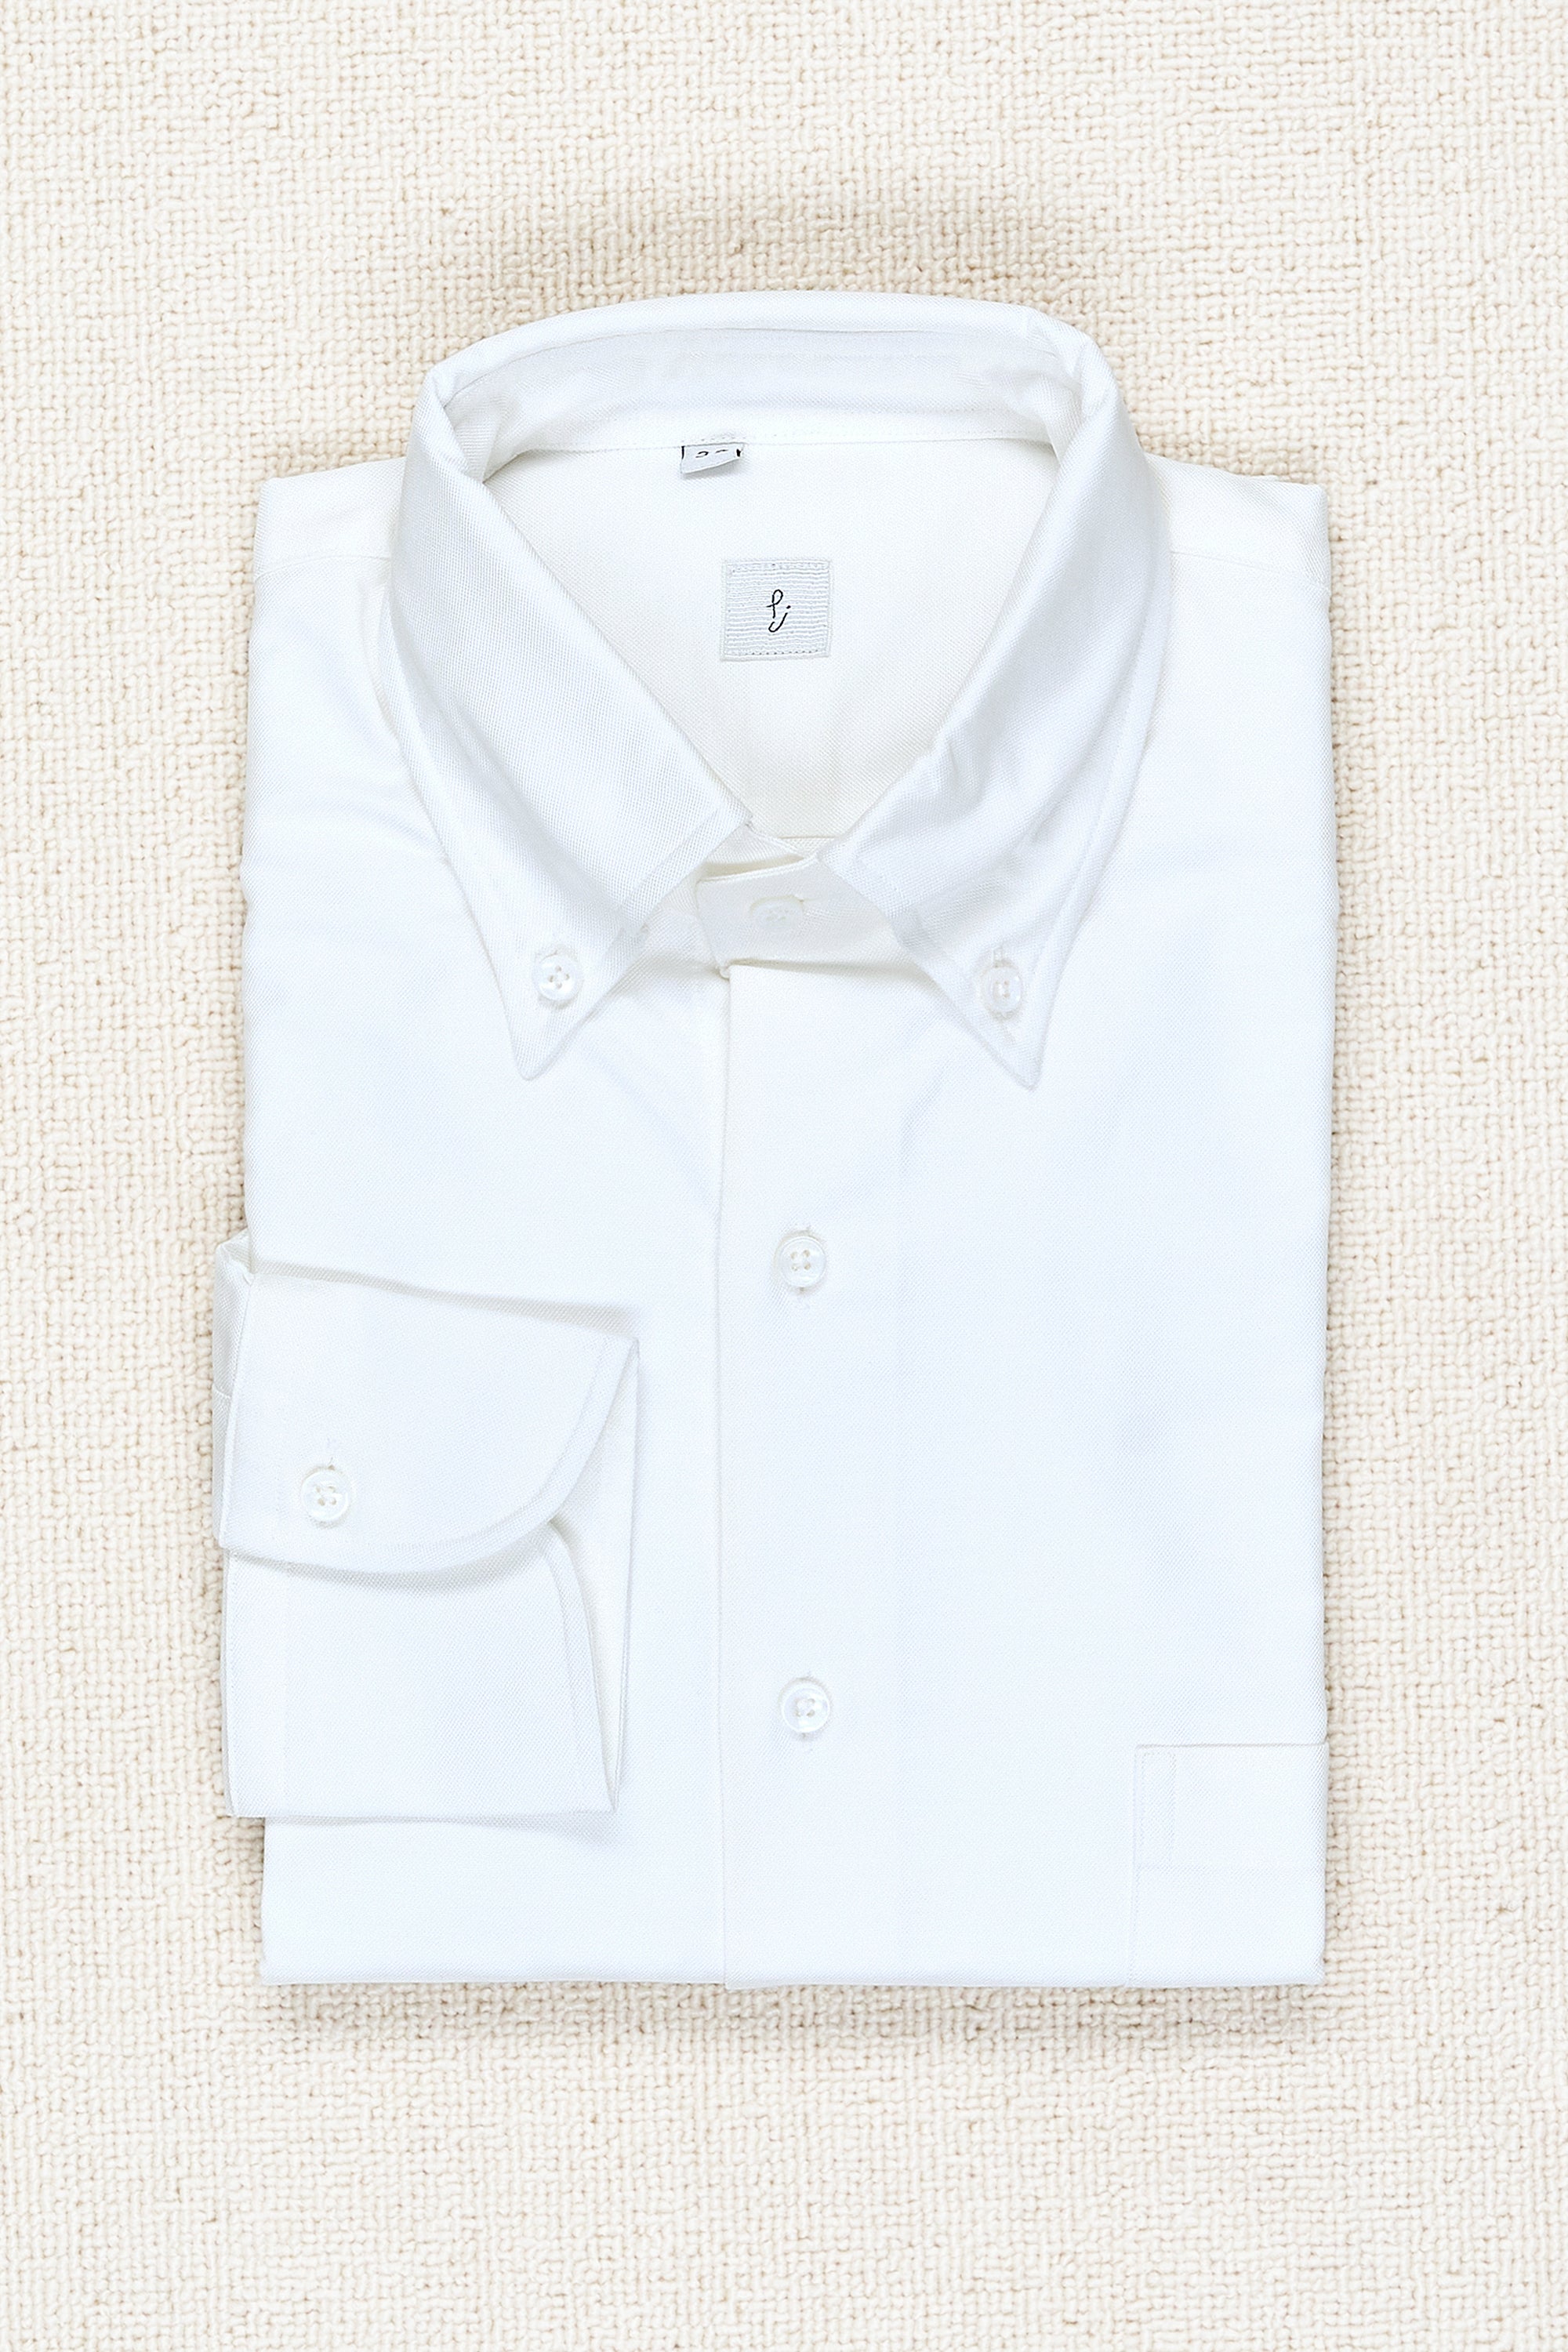 P. Johnson White Cotton Button Down Shirt